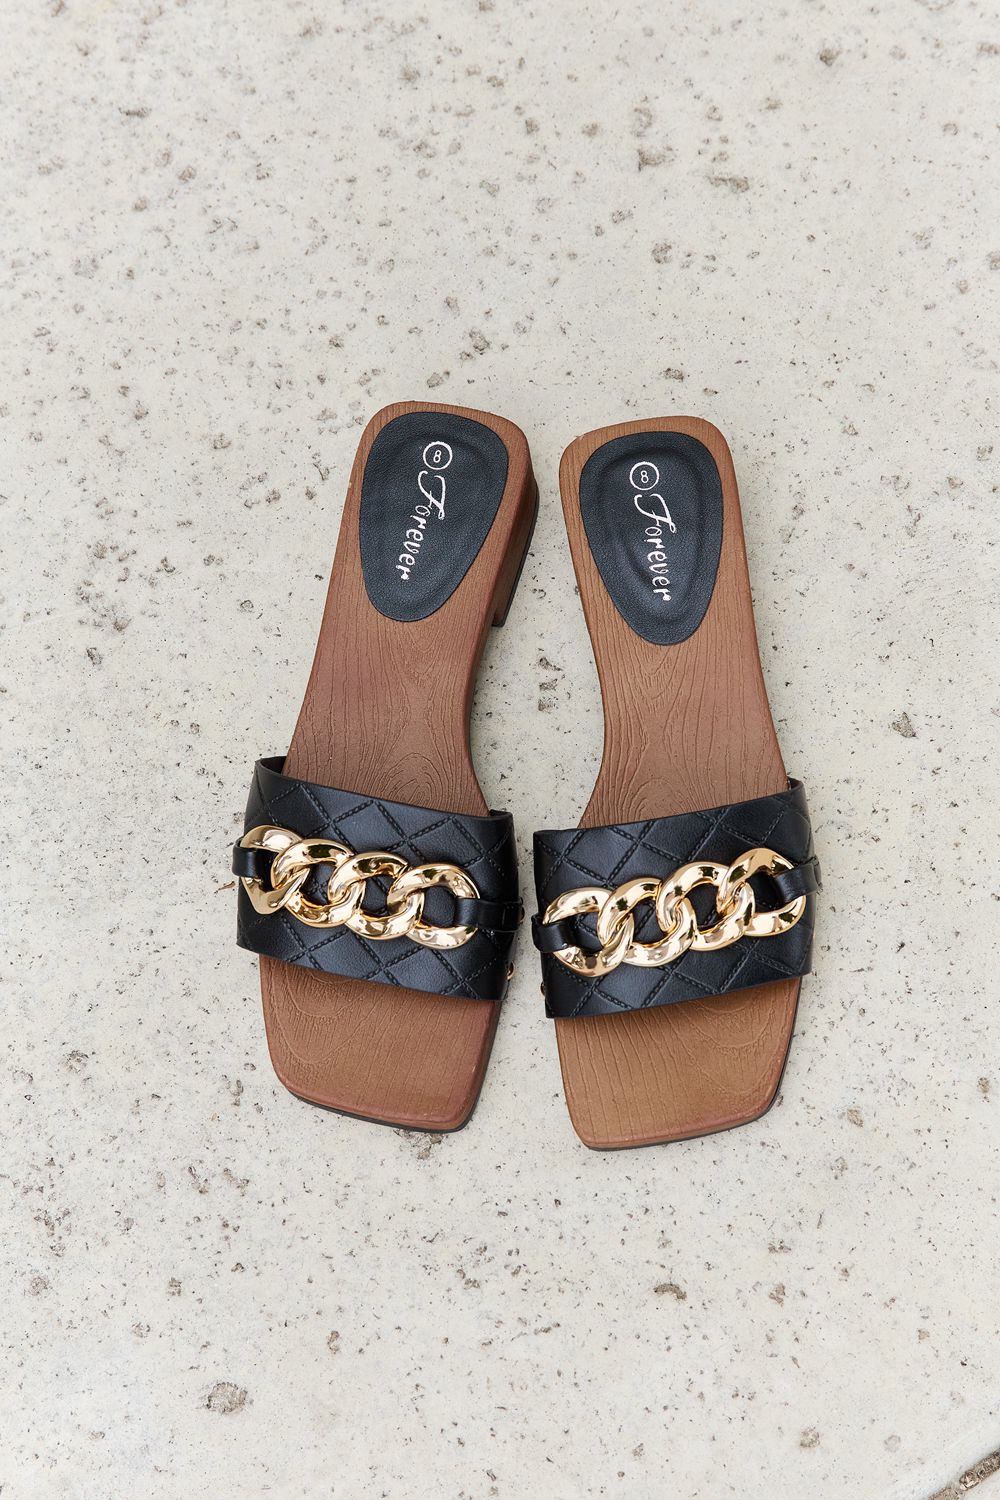 Forever Link Square Toe Chain Detail Clog Sandal in Black - nailedmoms